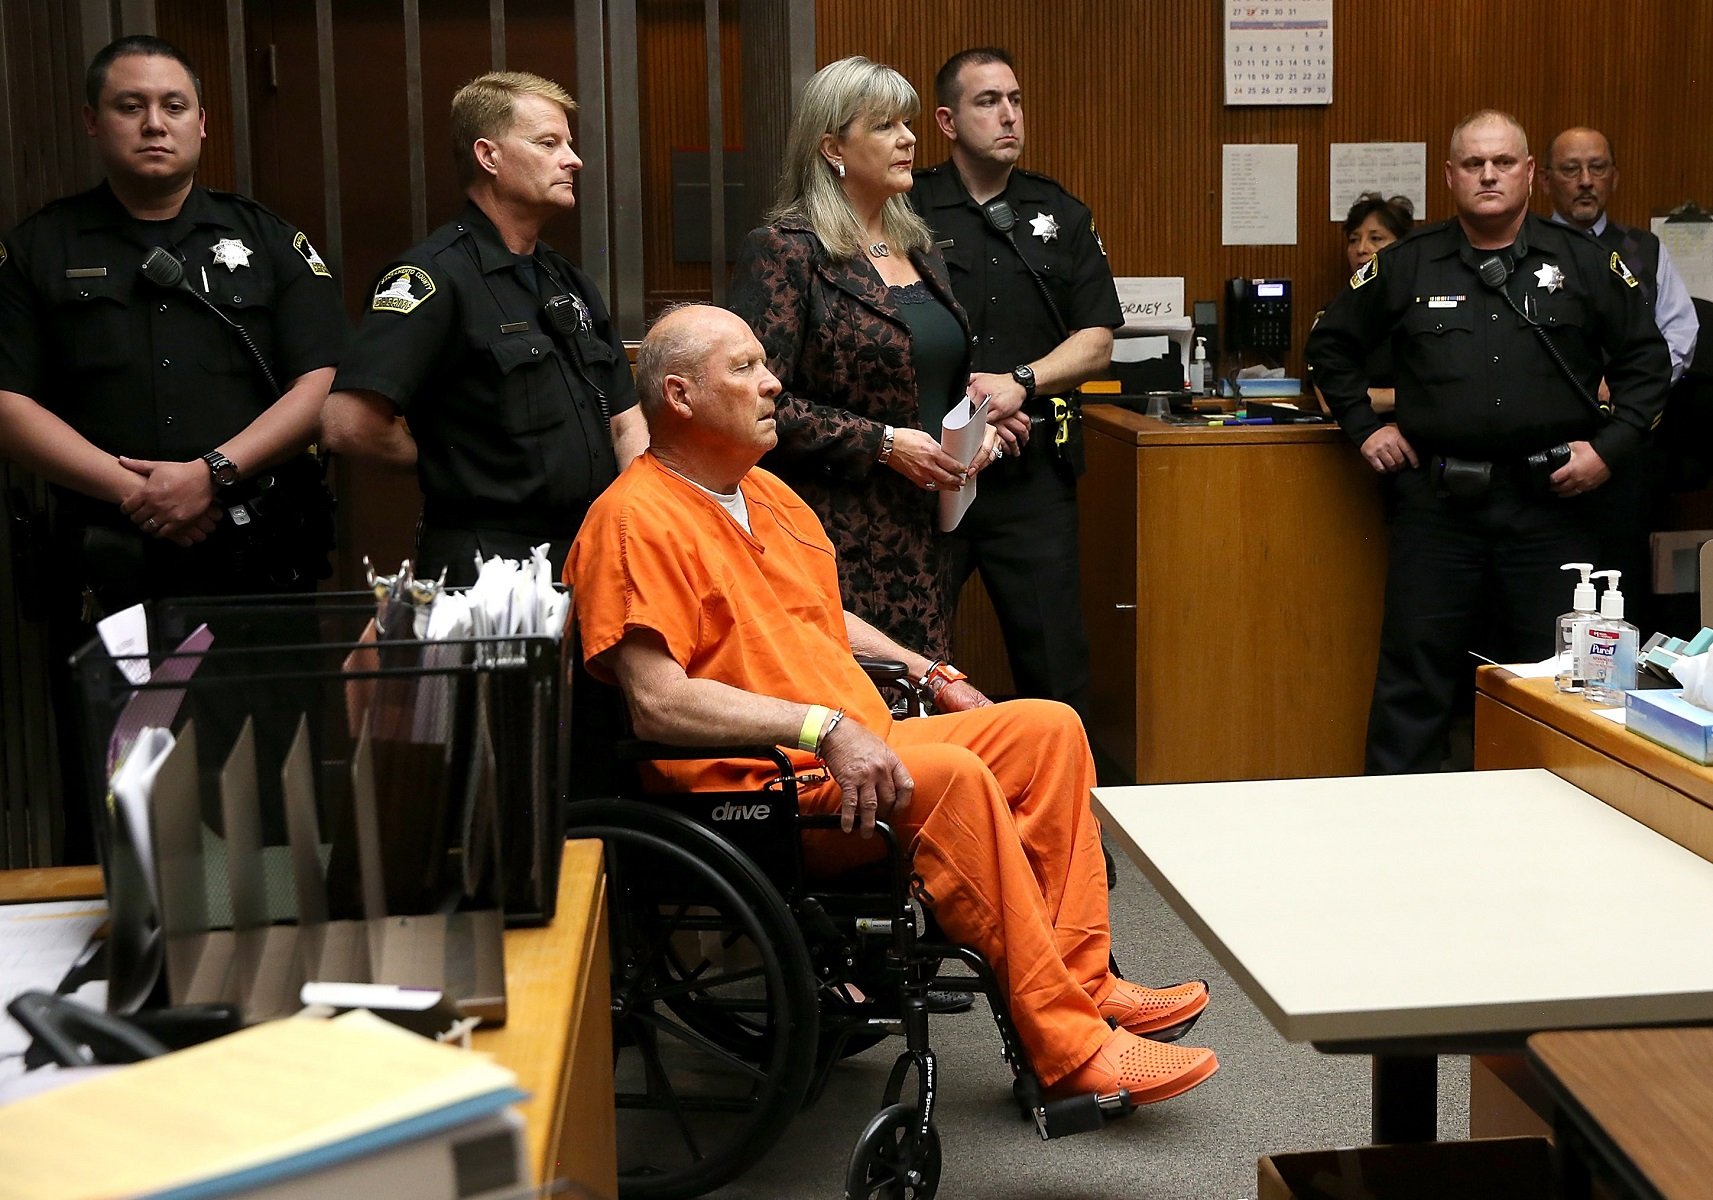 Joseph James DeAngelo, the suspected "Golden State Killer", appears in court for his arraignment on April 27, 2018 in Sacramento, Californi